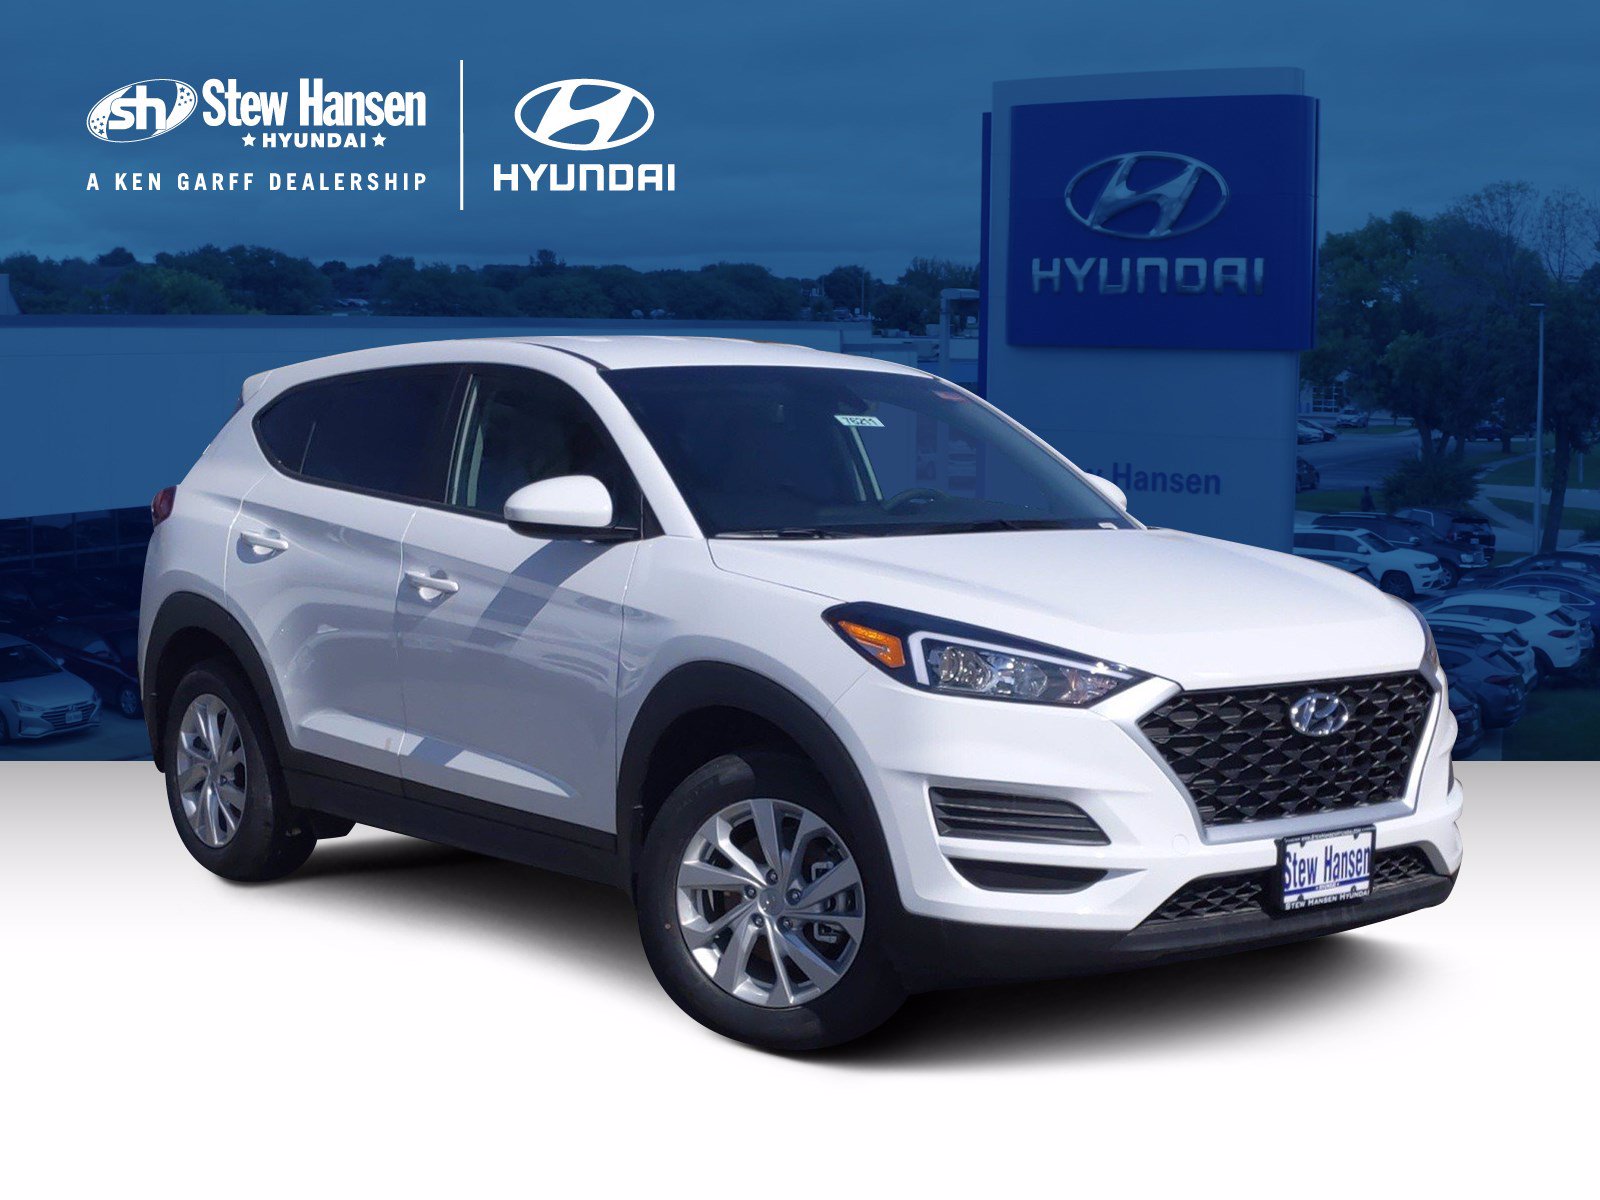 43 Top Photos Hyundai Tucson Sport For Sale : 2018 Hyundai Tucson 2.4L Sport AWD for Sale in District of ...